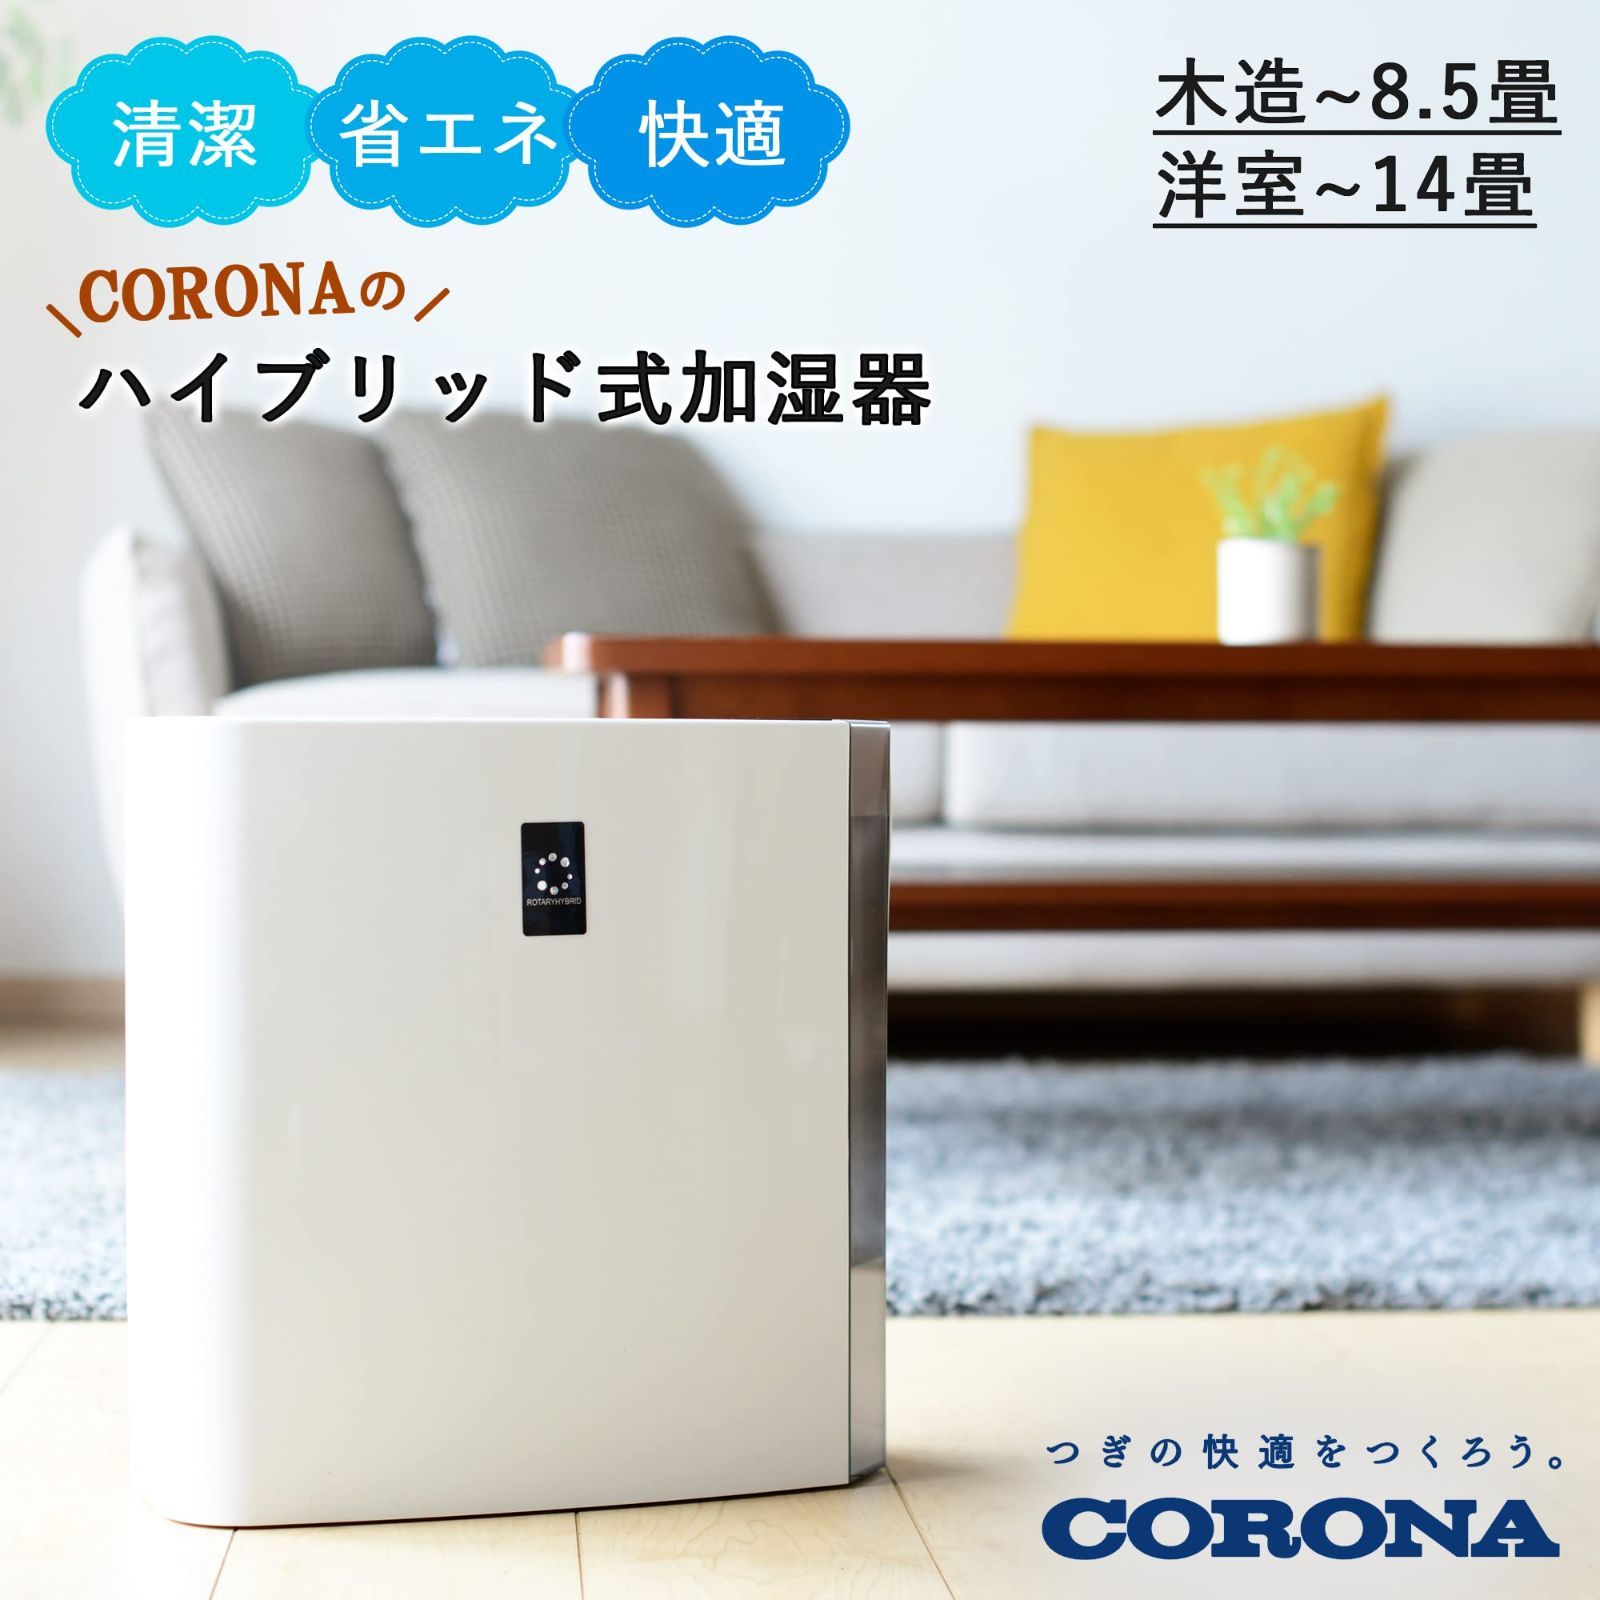 CORONAコロナ ハイブリッド式 加湿器 日本生産 500mLタイプ 木造和室 